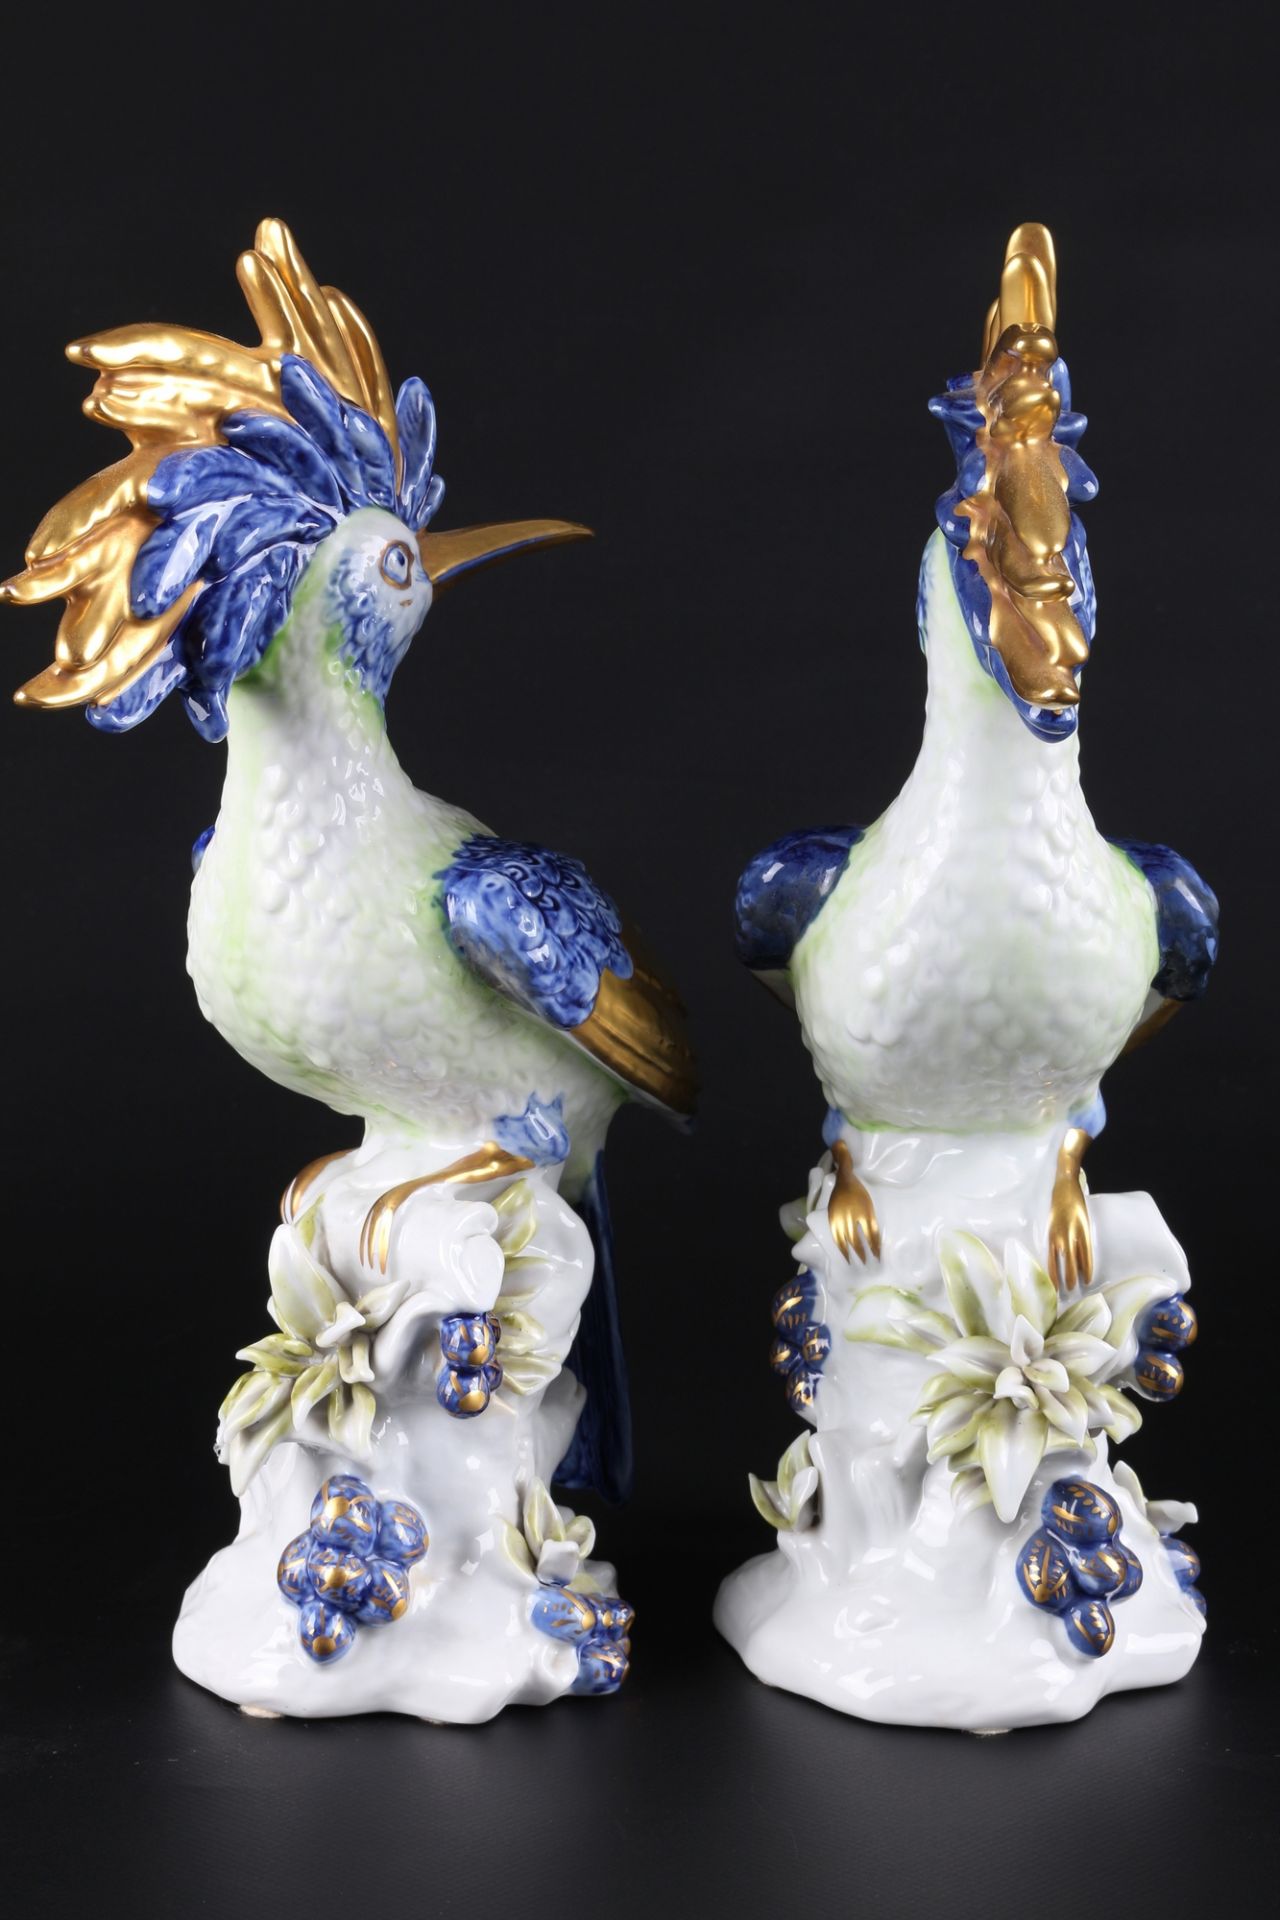 Manifattura Artistica le Porcellane großer Kakadu mit 2 Wiedehopfe, porcelain parrot / hoopoo, - Bild 5 aus 6